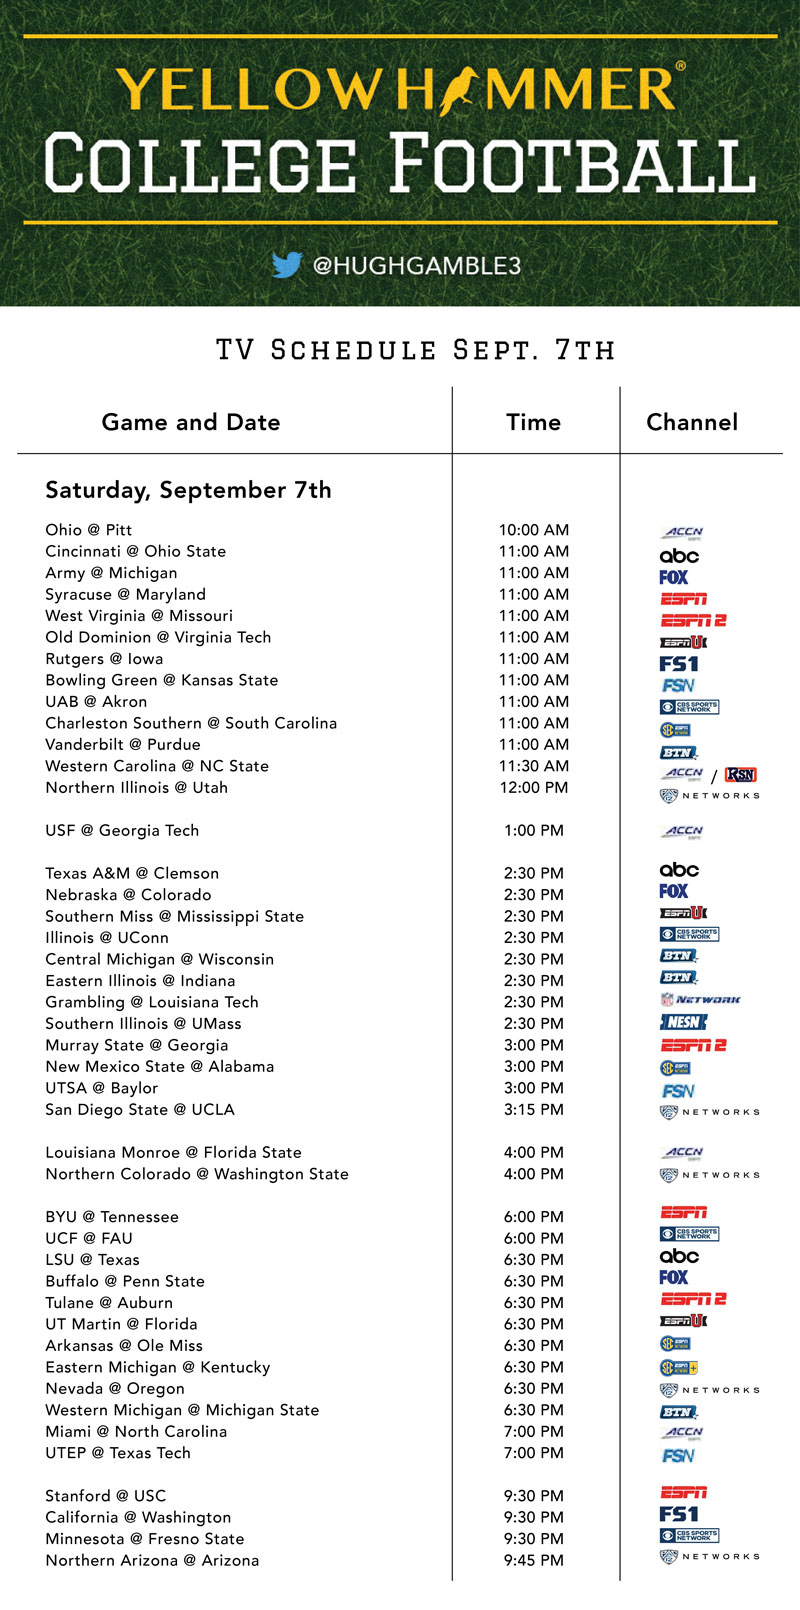 This weekend’s comprehensive college football TV schedule